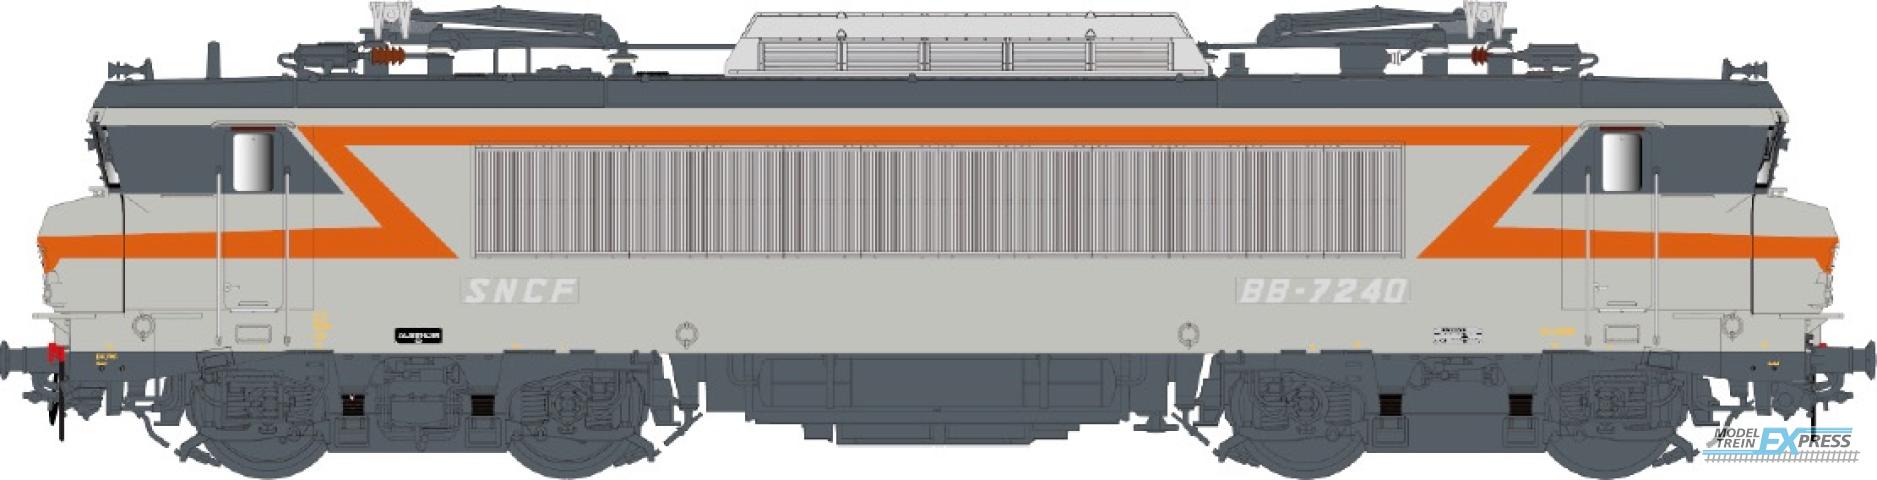 LS Models 11707 BB7240, betongrijs/oranje, nummerplaten / Ep. IV / SNCF / HO / AC / 1 P.